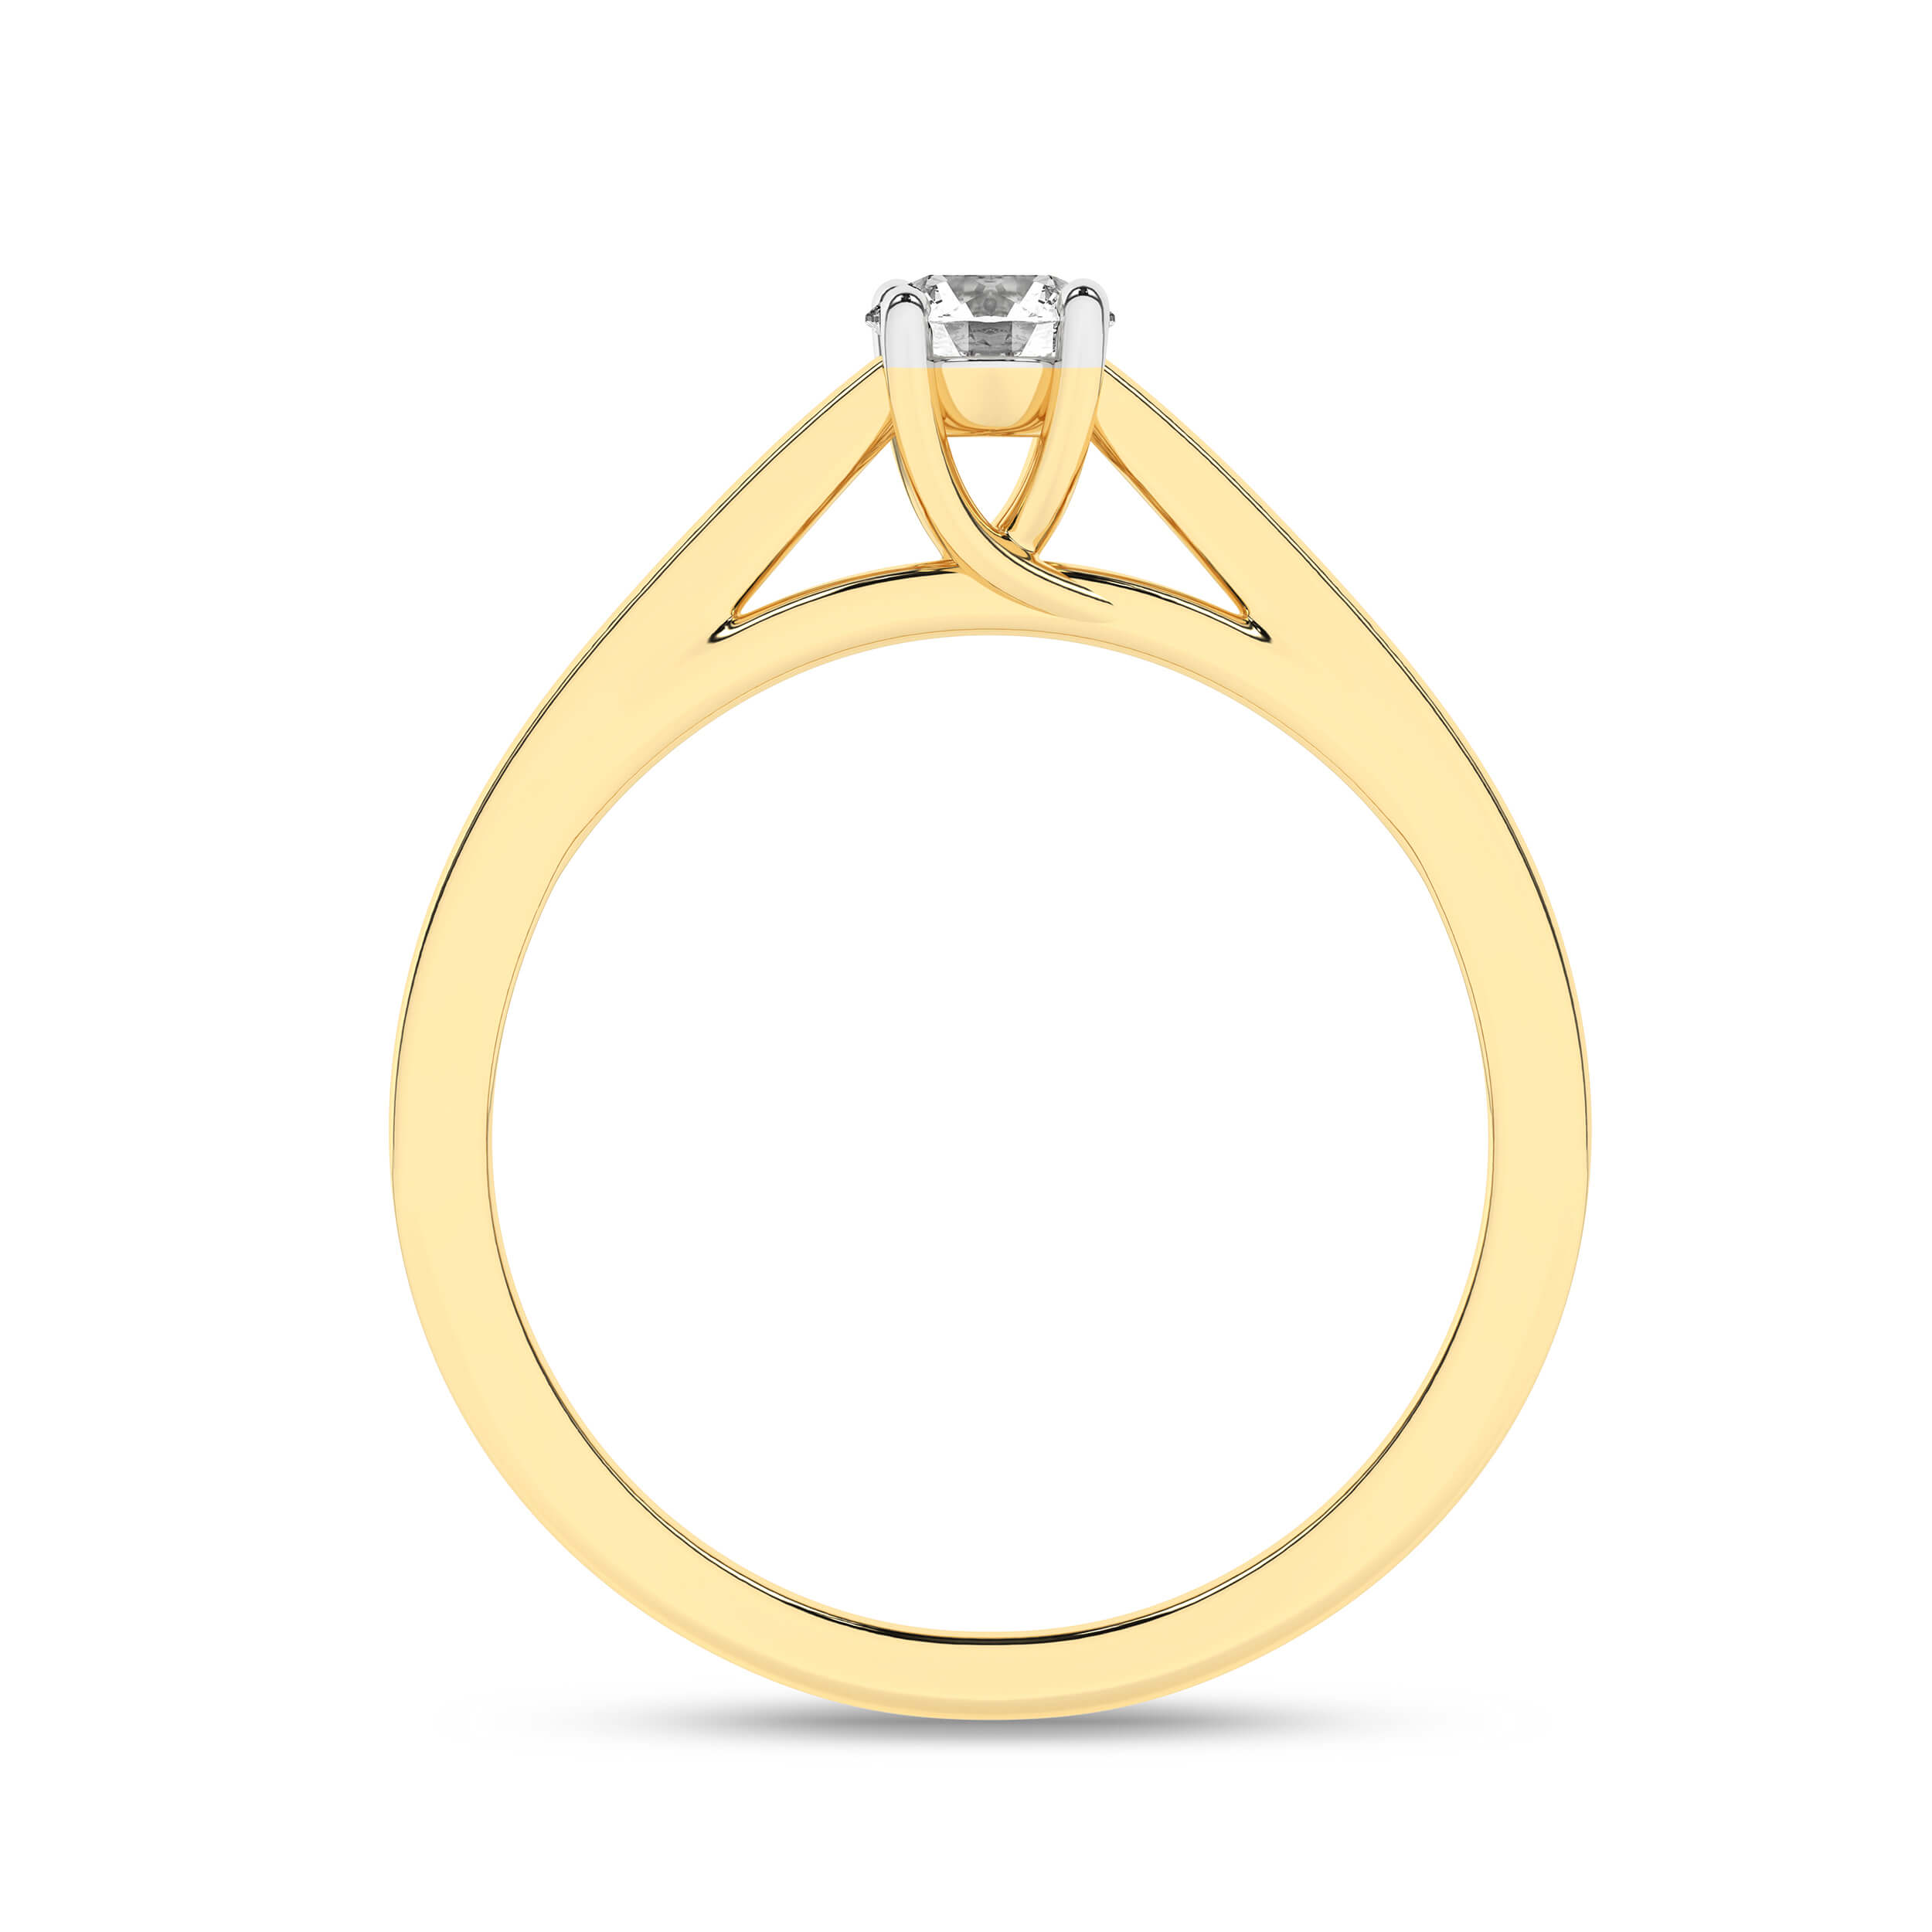 Inel de logodna din Aur Galben 14K cu Diamant 0.25Ct, articol RS1234, previzualizare foto 1